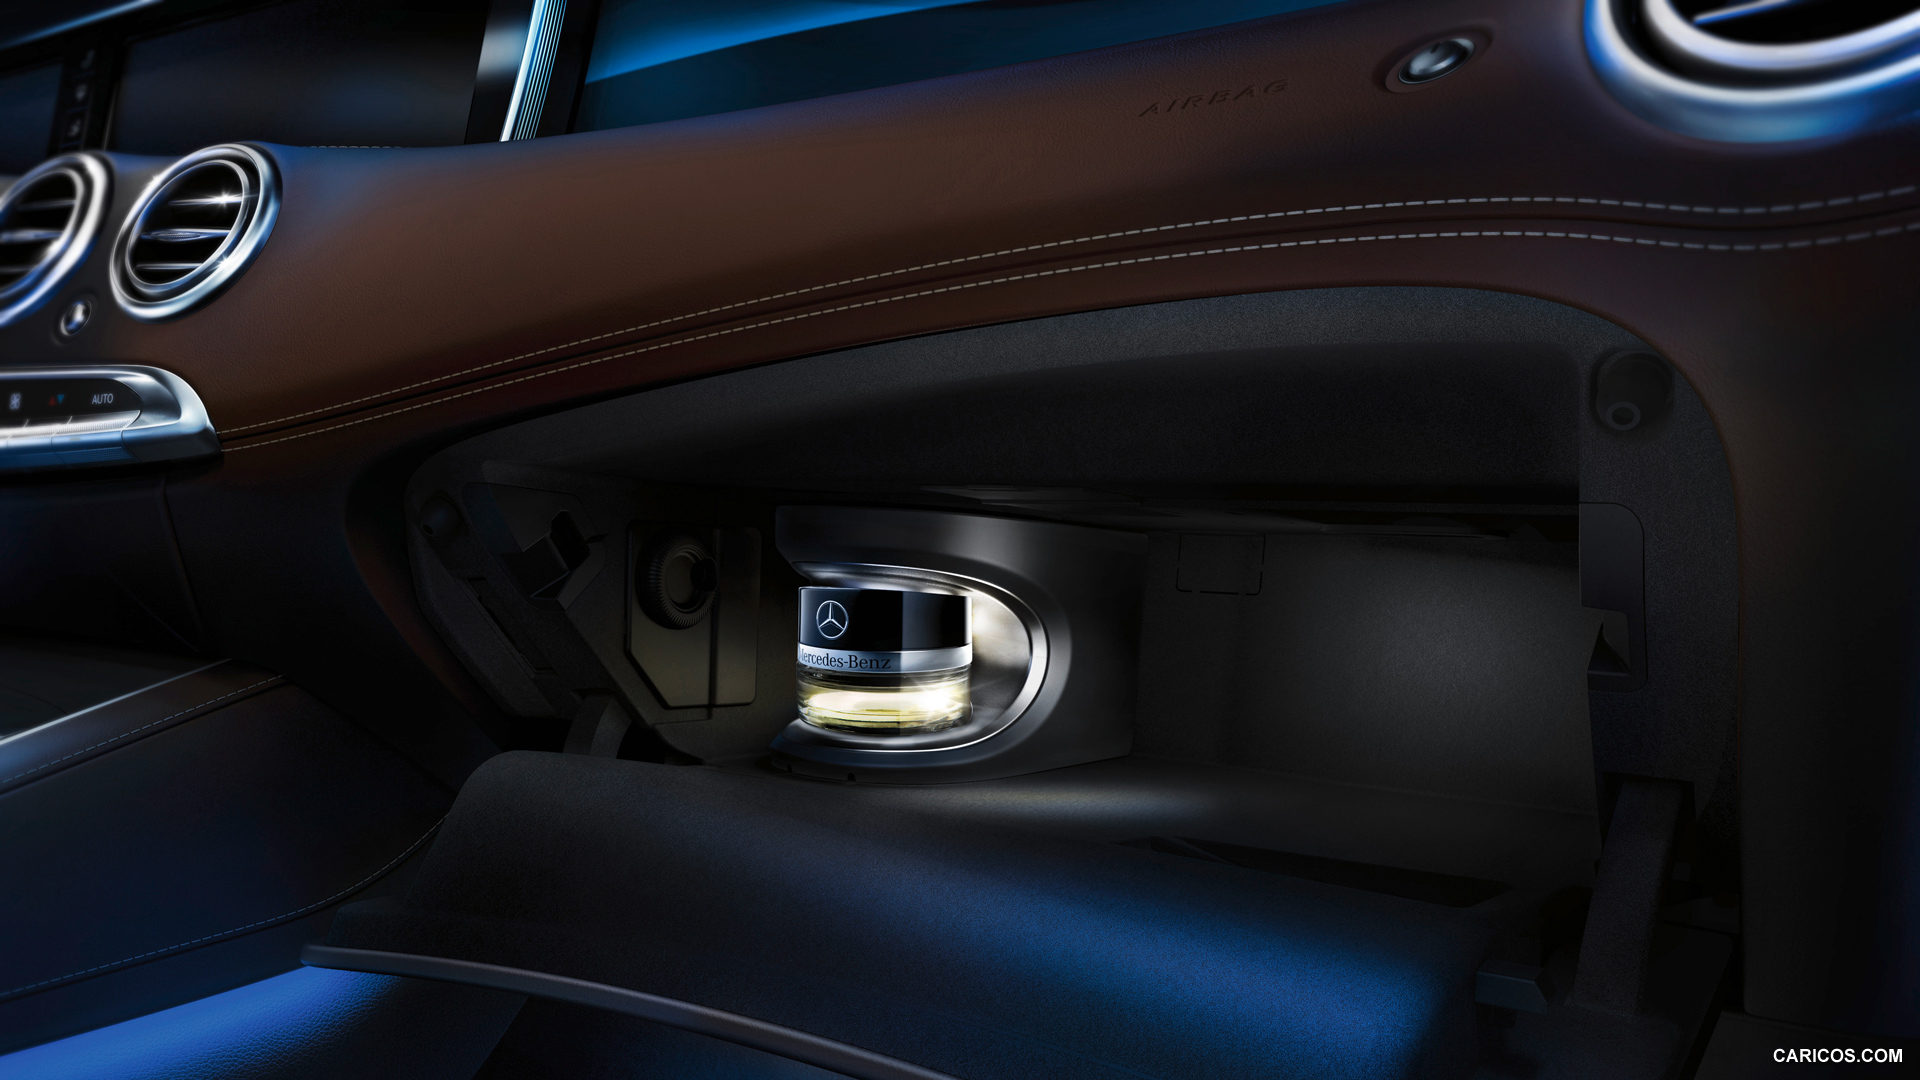 2015 Mercedes Benz S Class Coupe Interior Led Illumination